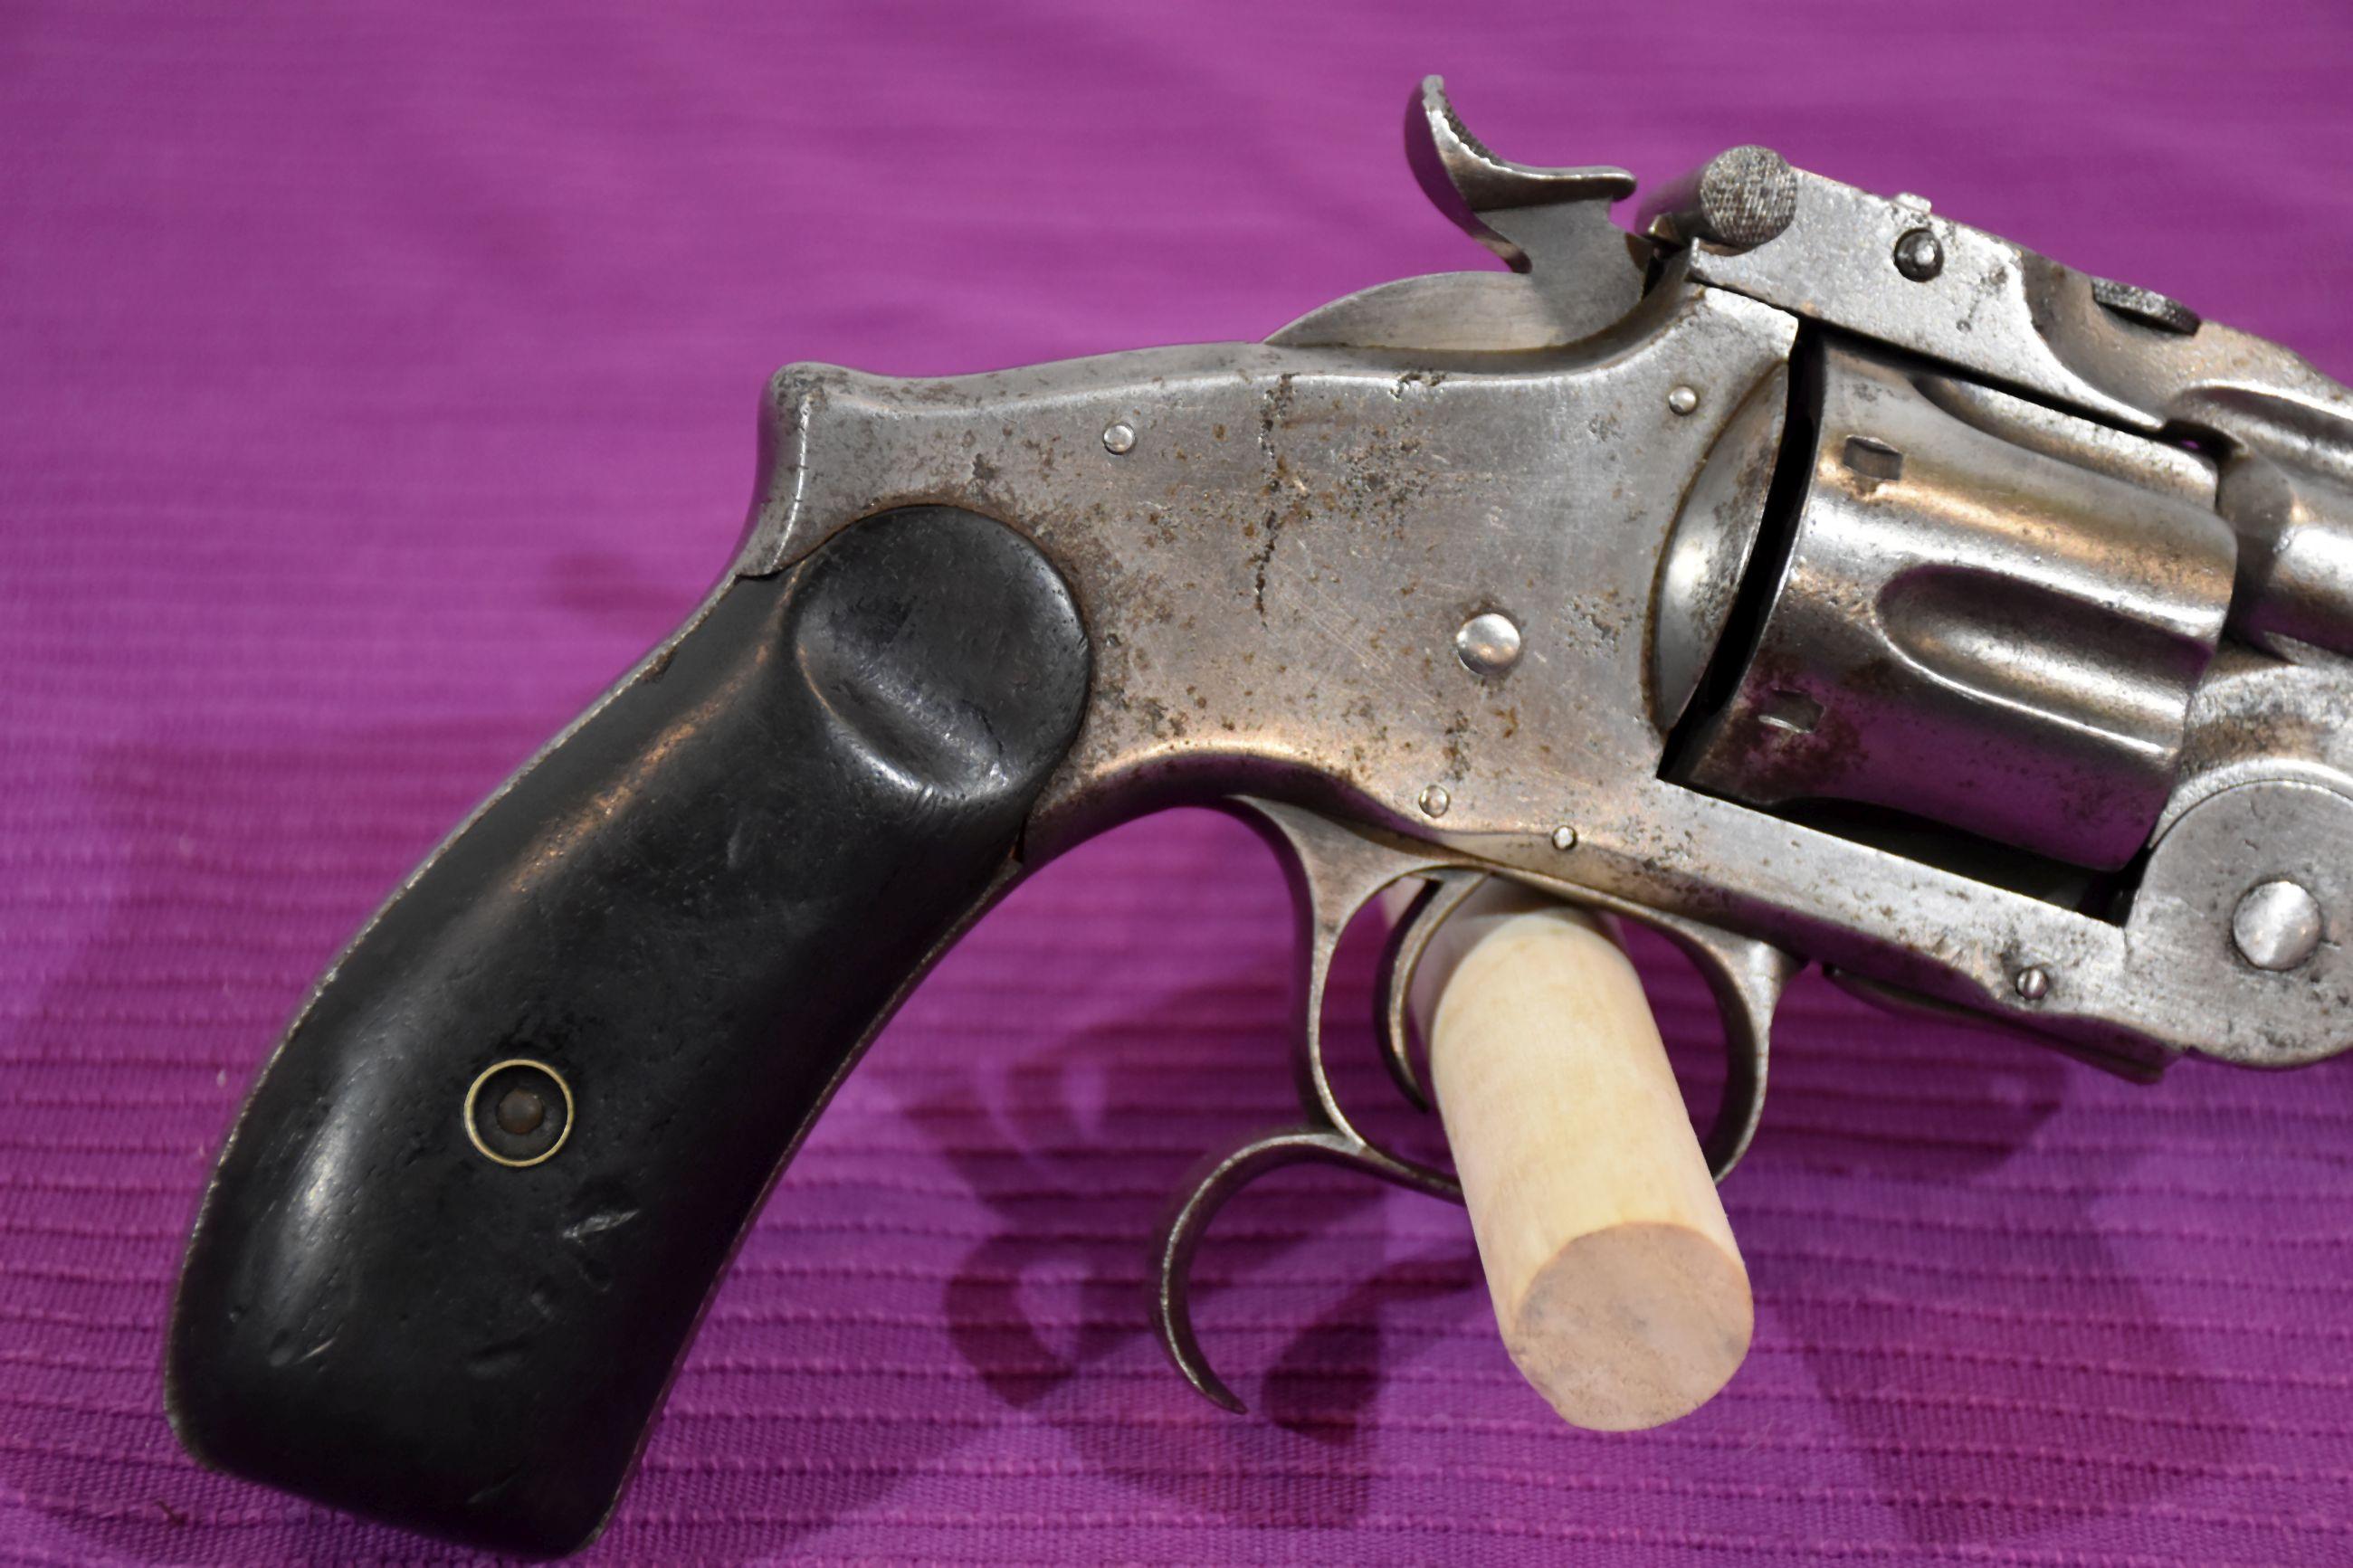 Loewe Ludwig Co. Russian Model Revolver, 44 Cal Russian, 6.5" Barrel, 6 Shot, SN: 6761, This Company